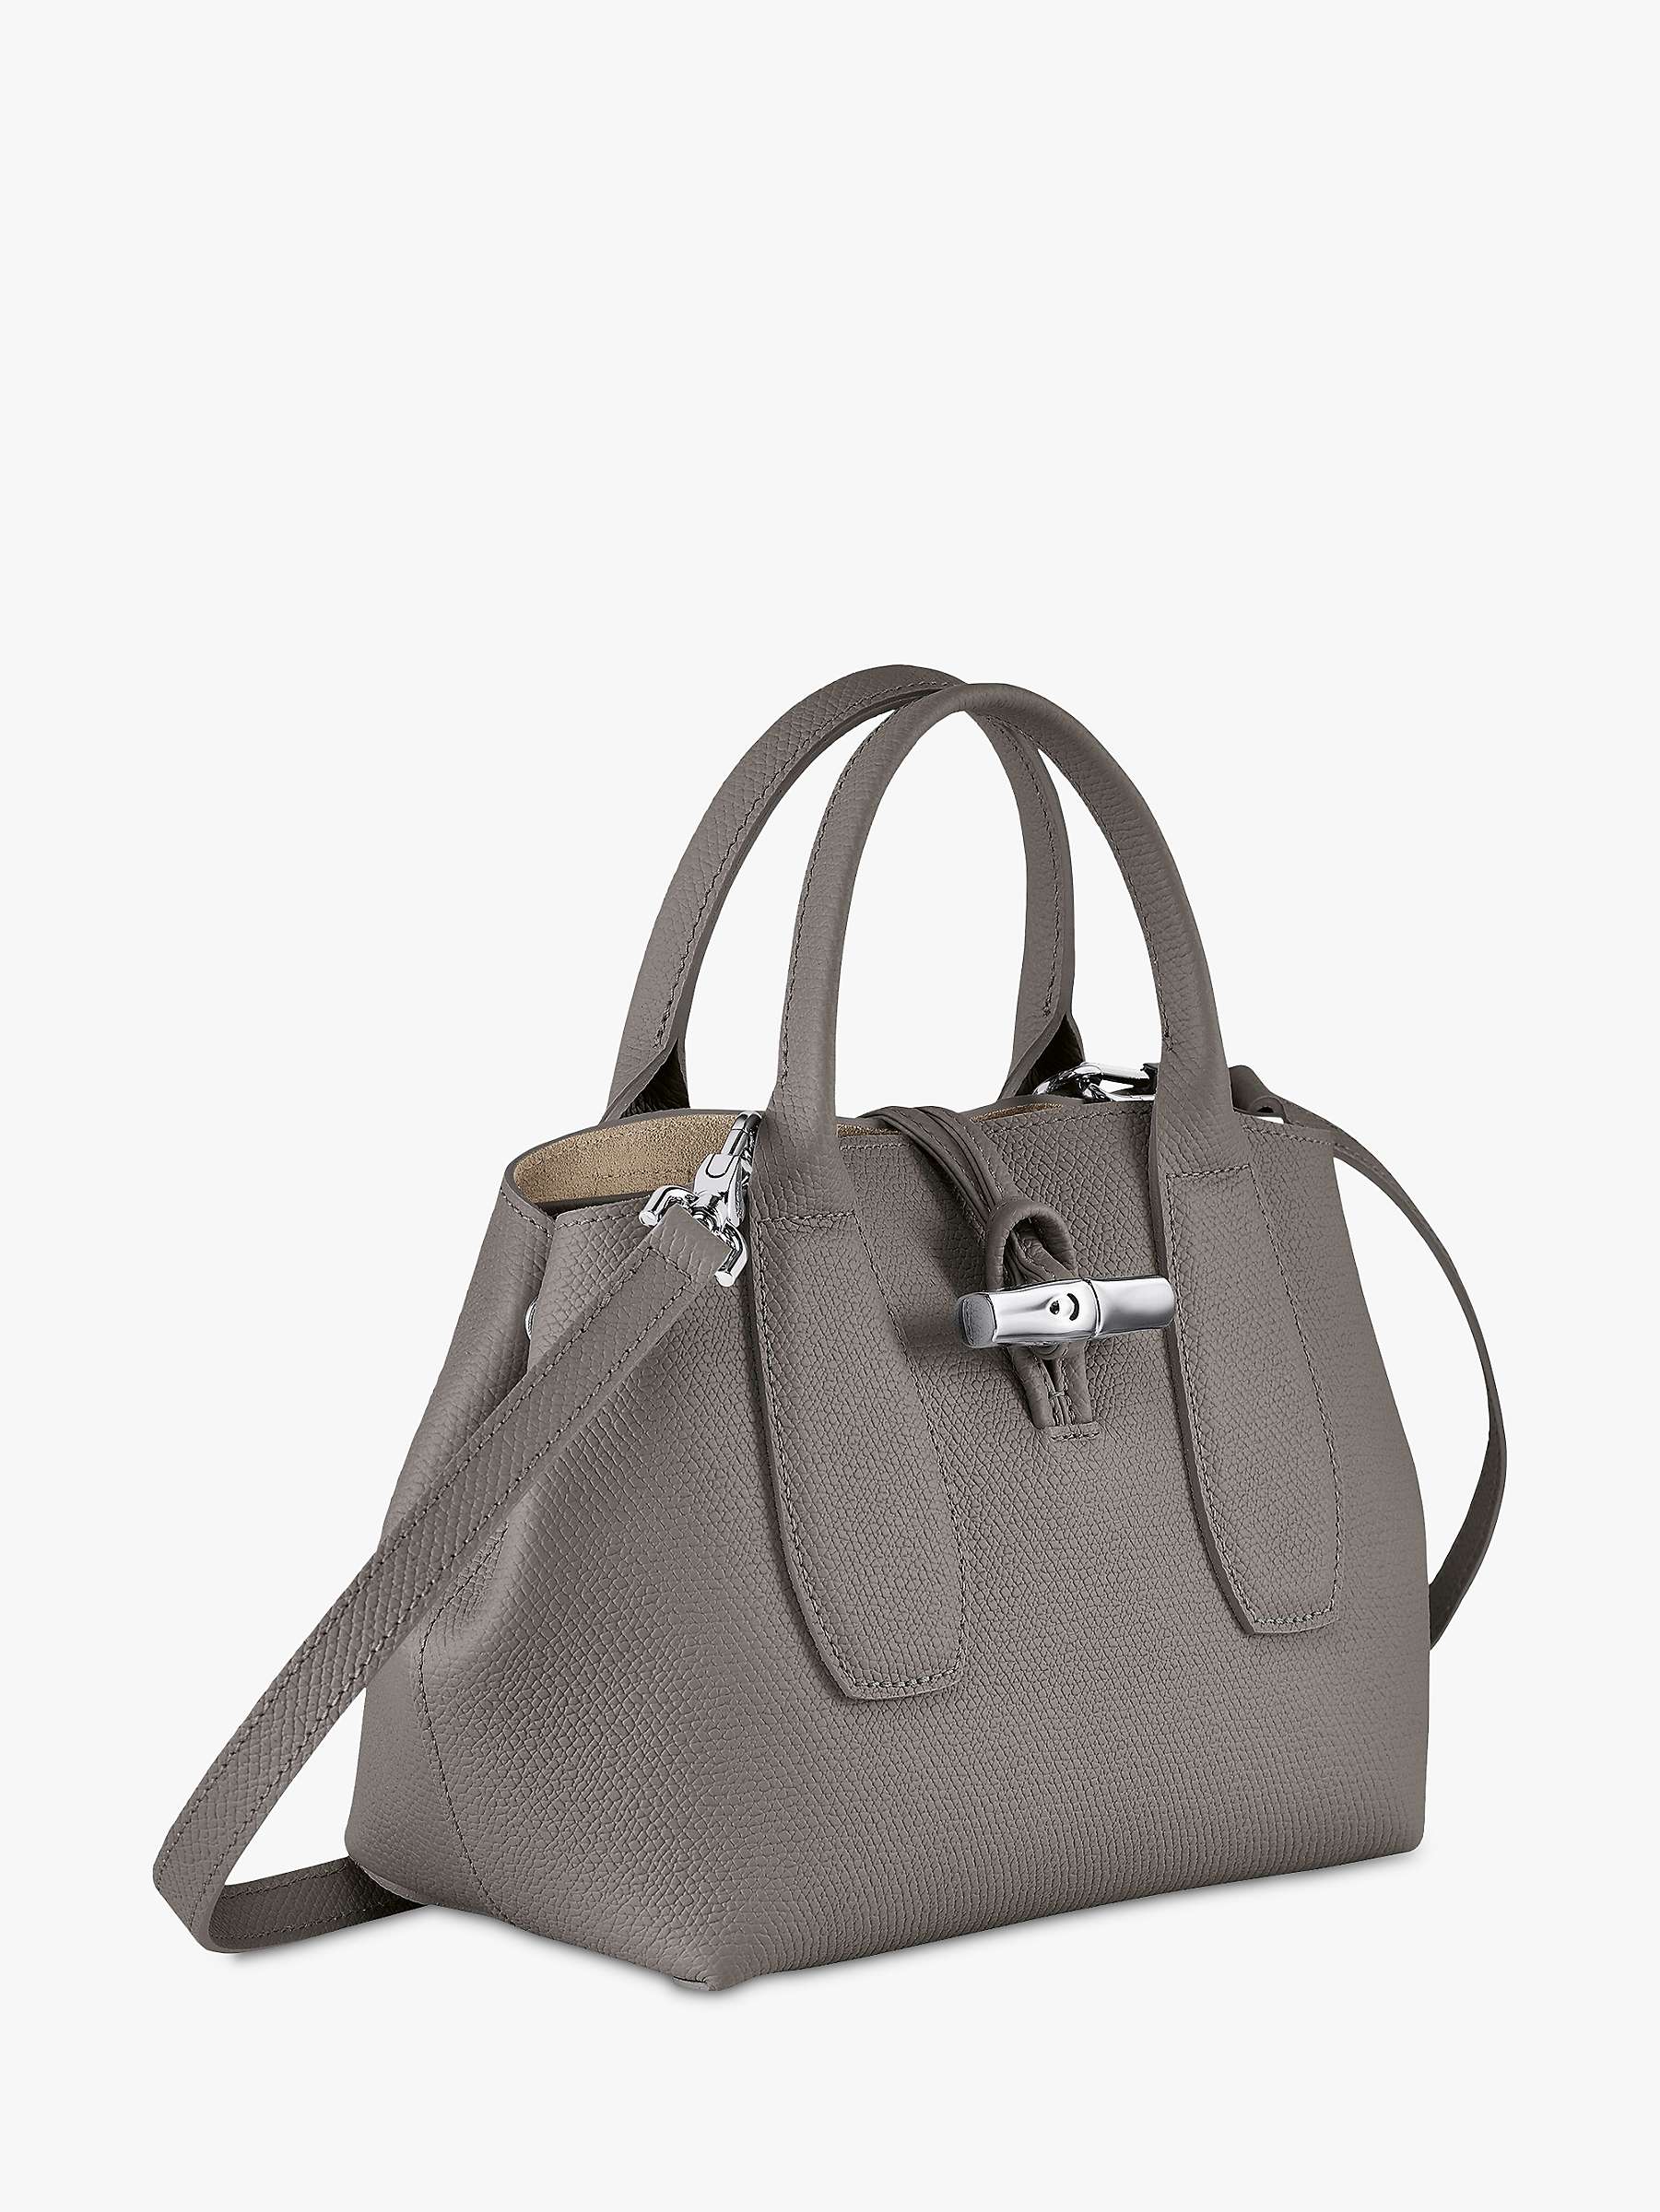 Longchamp Roseau Small Leather Top Handle Bag, Turtledove at John Lewis ...